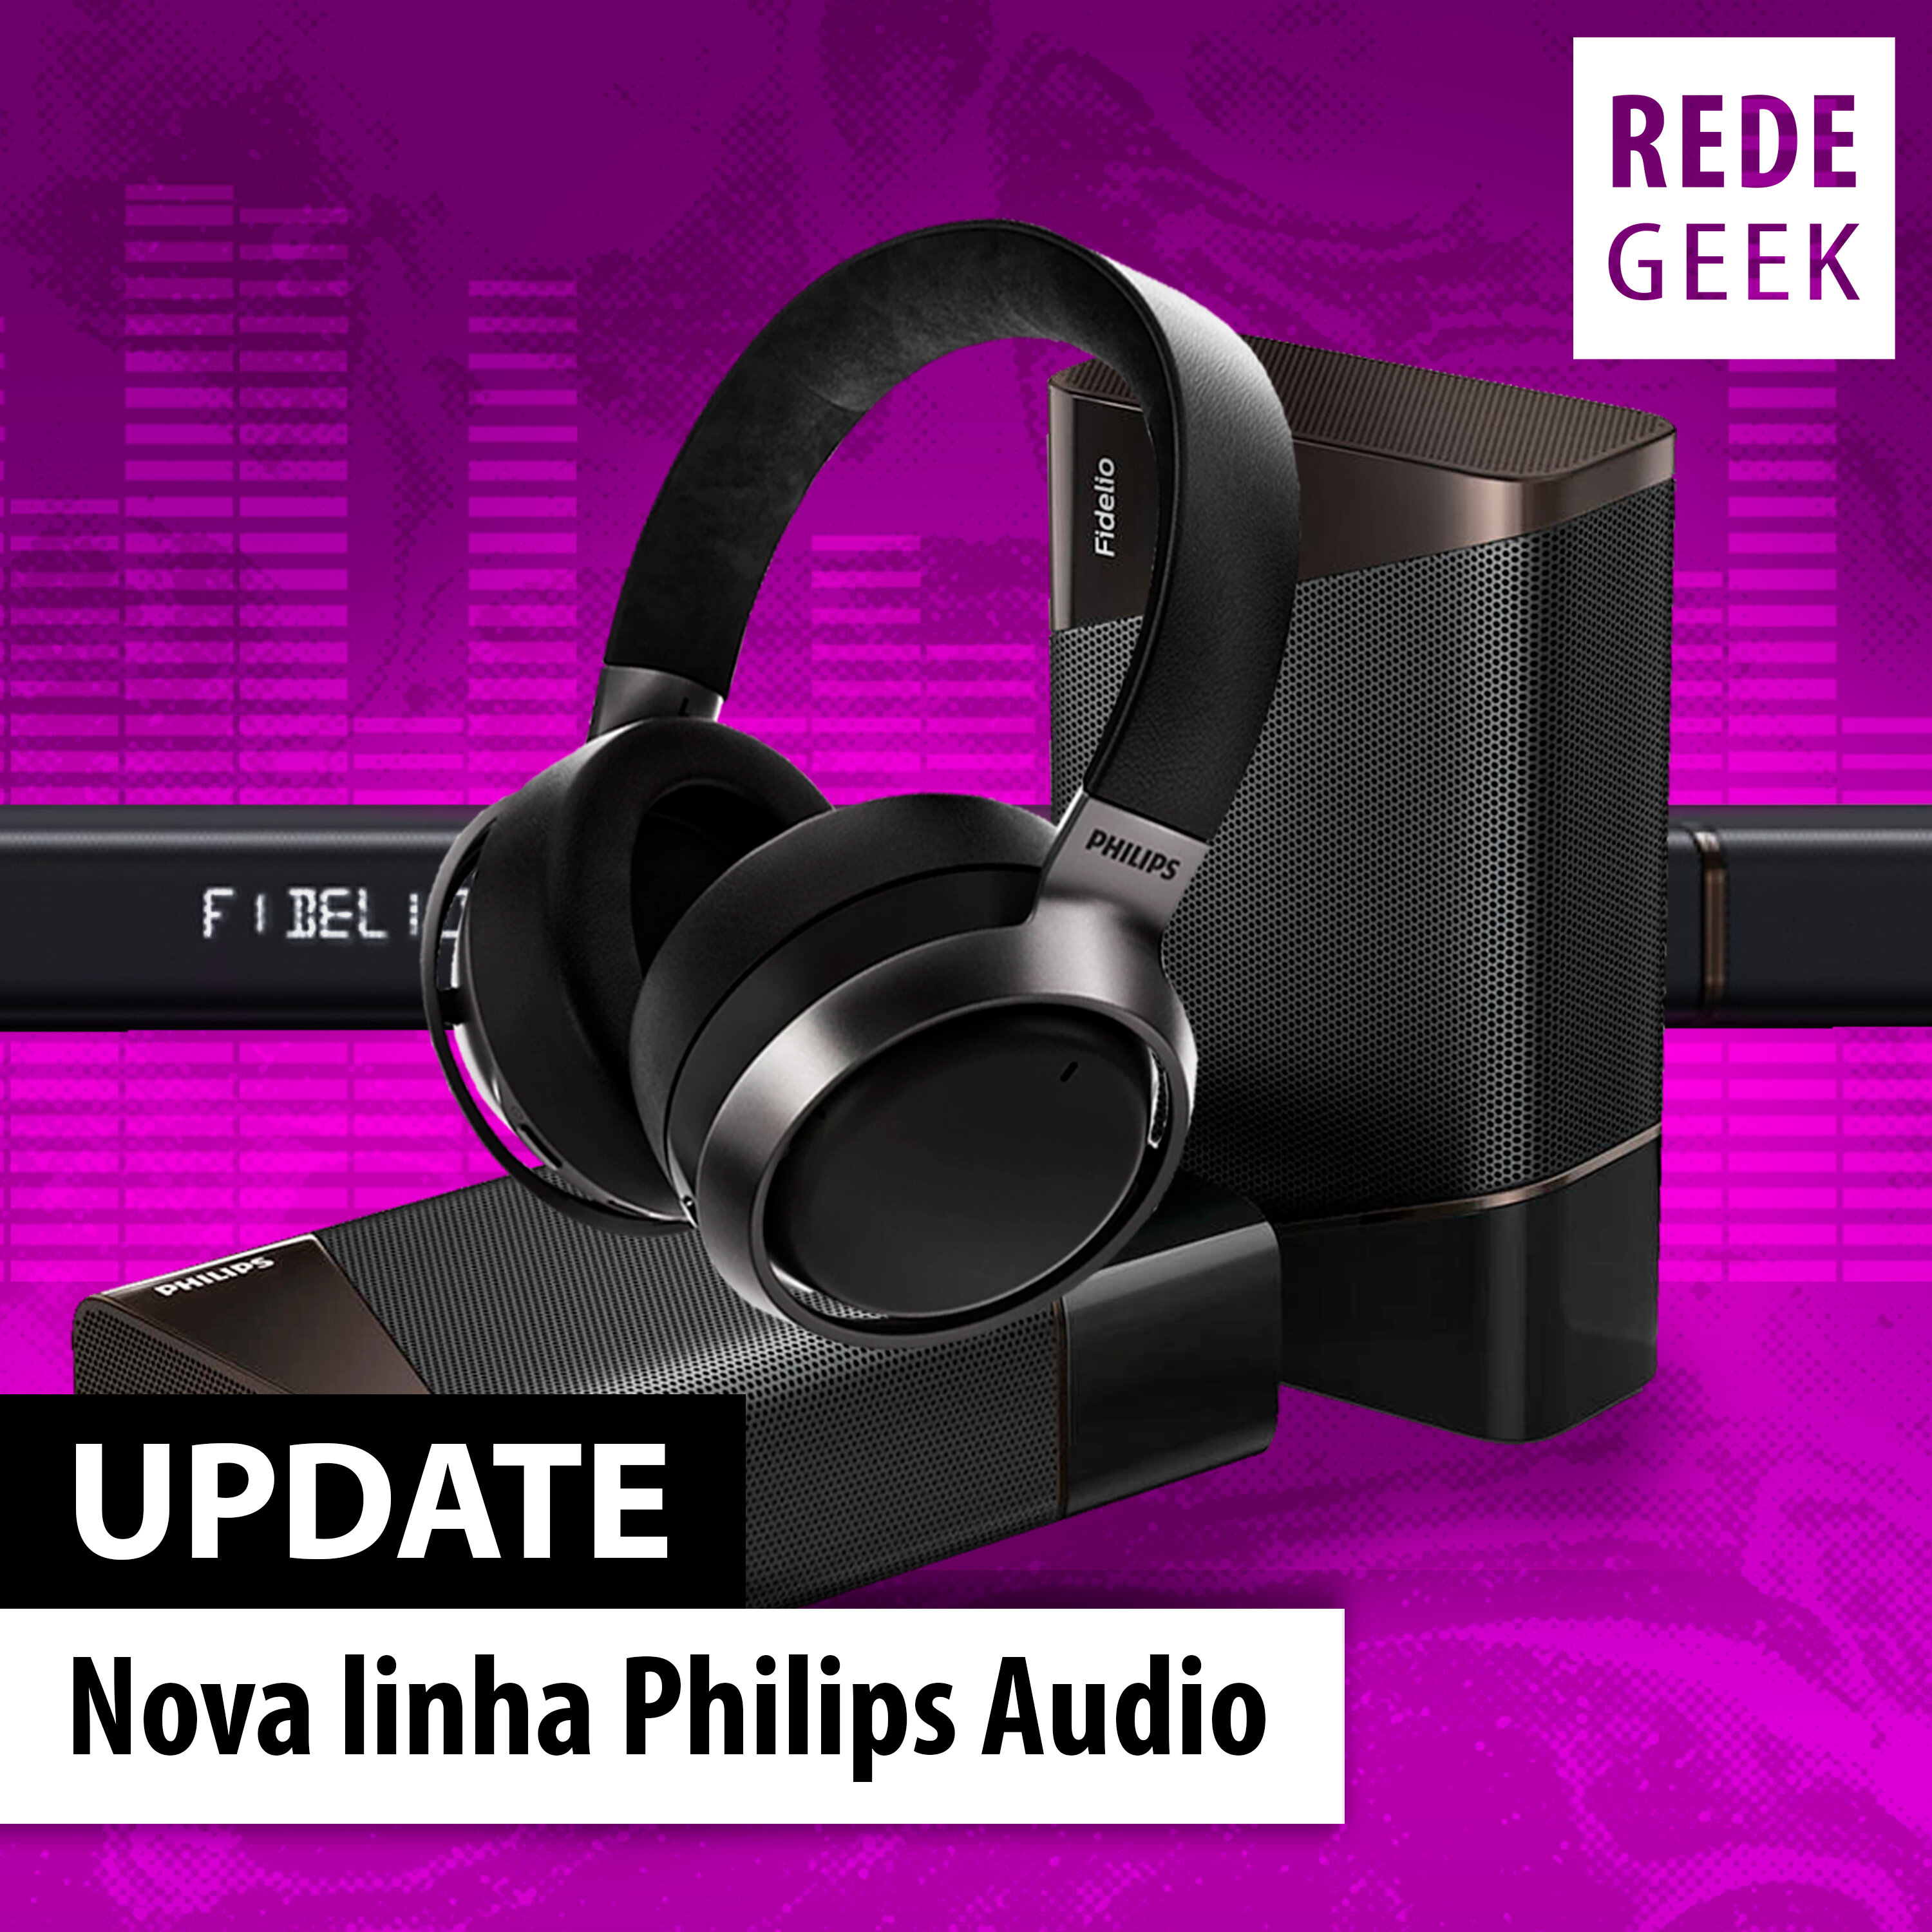 UPDATE - Nova linha Philips Audio